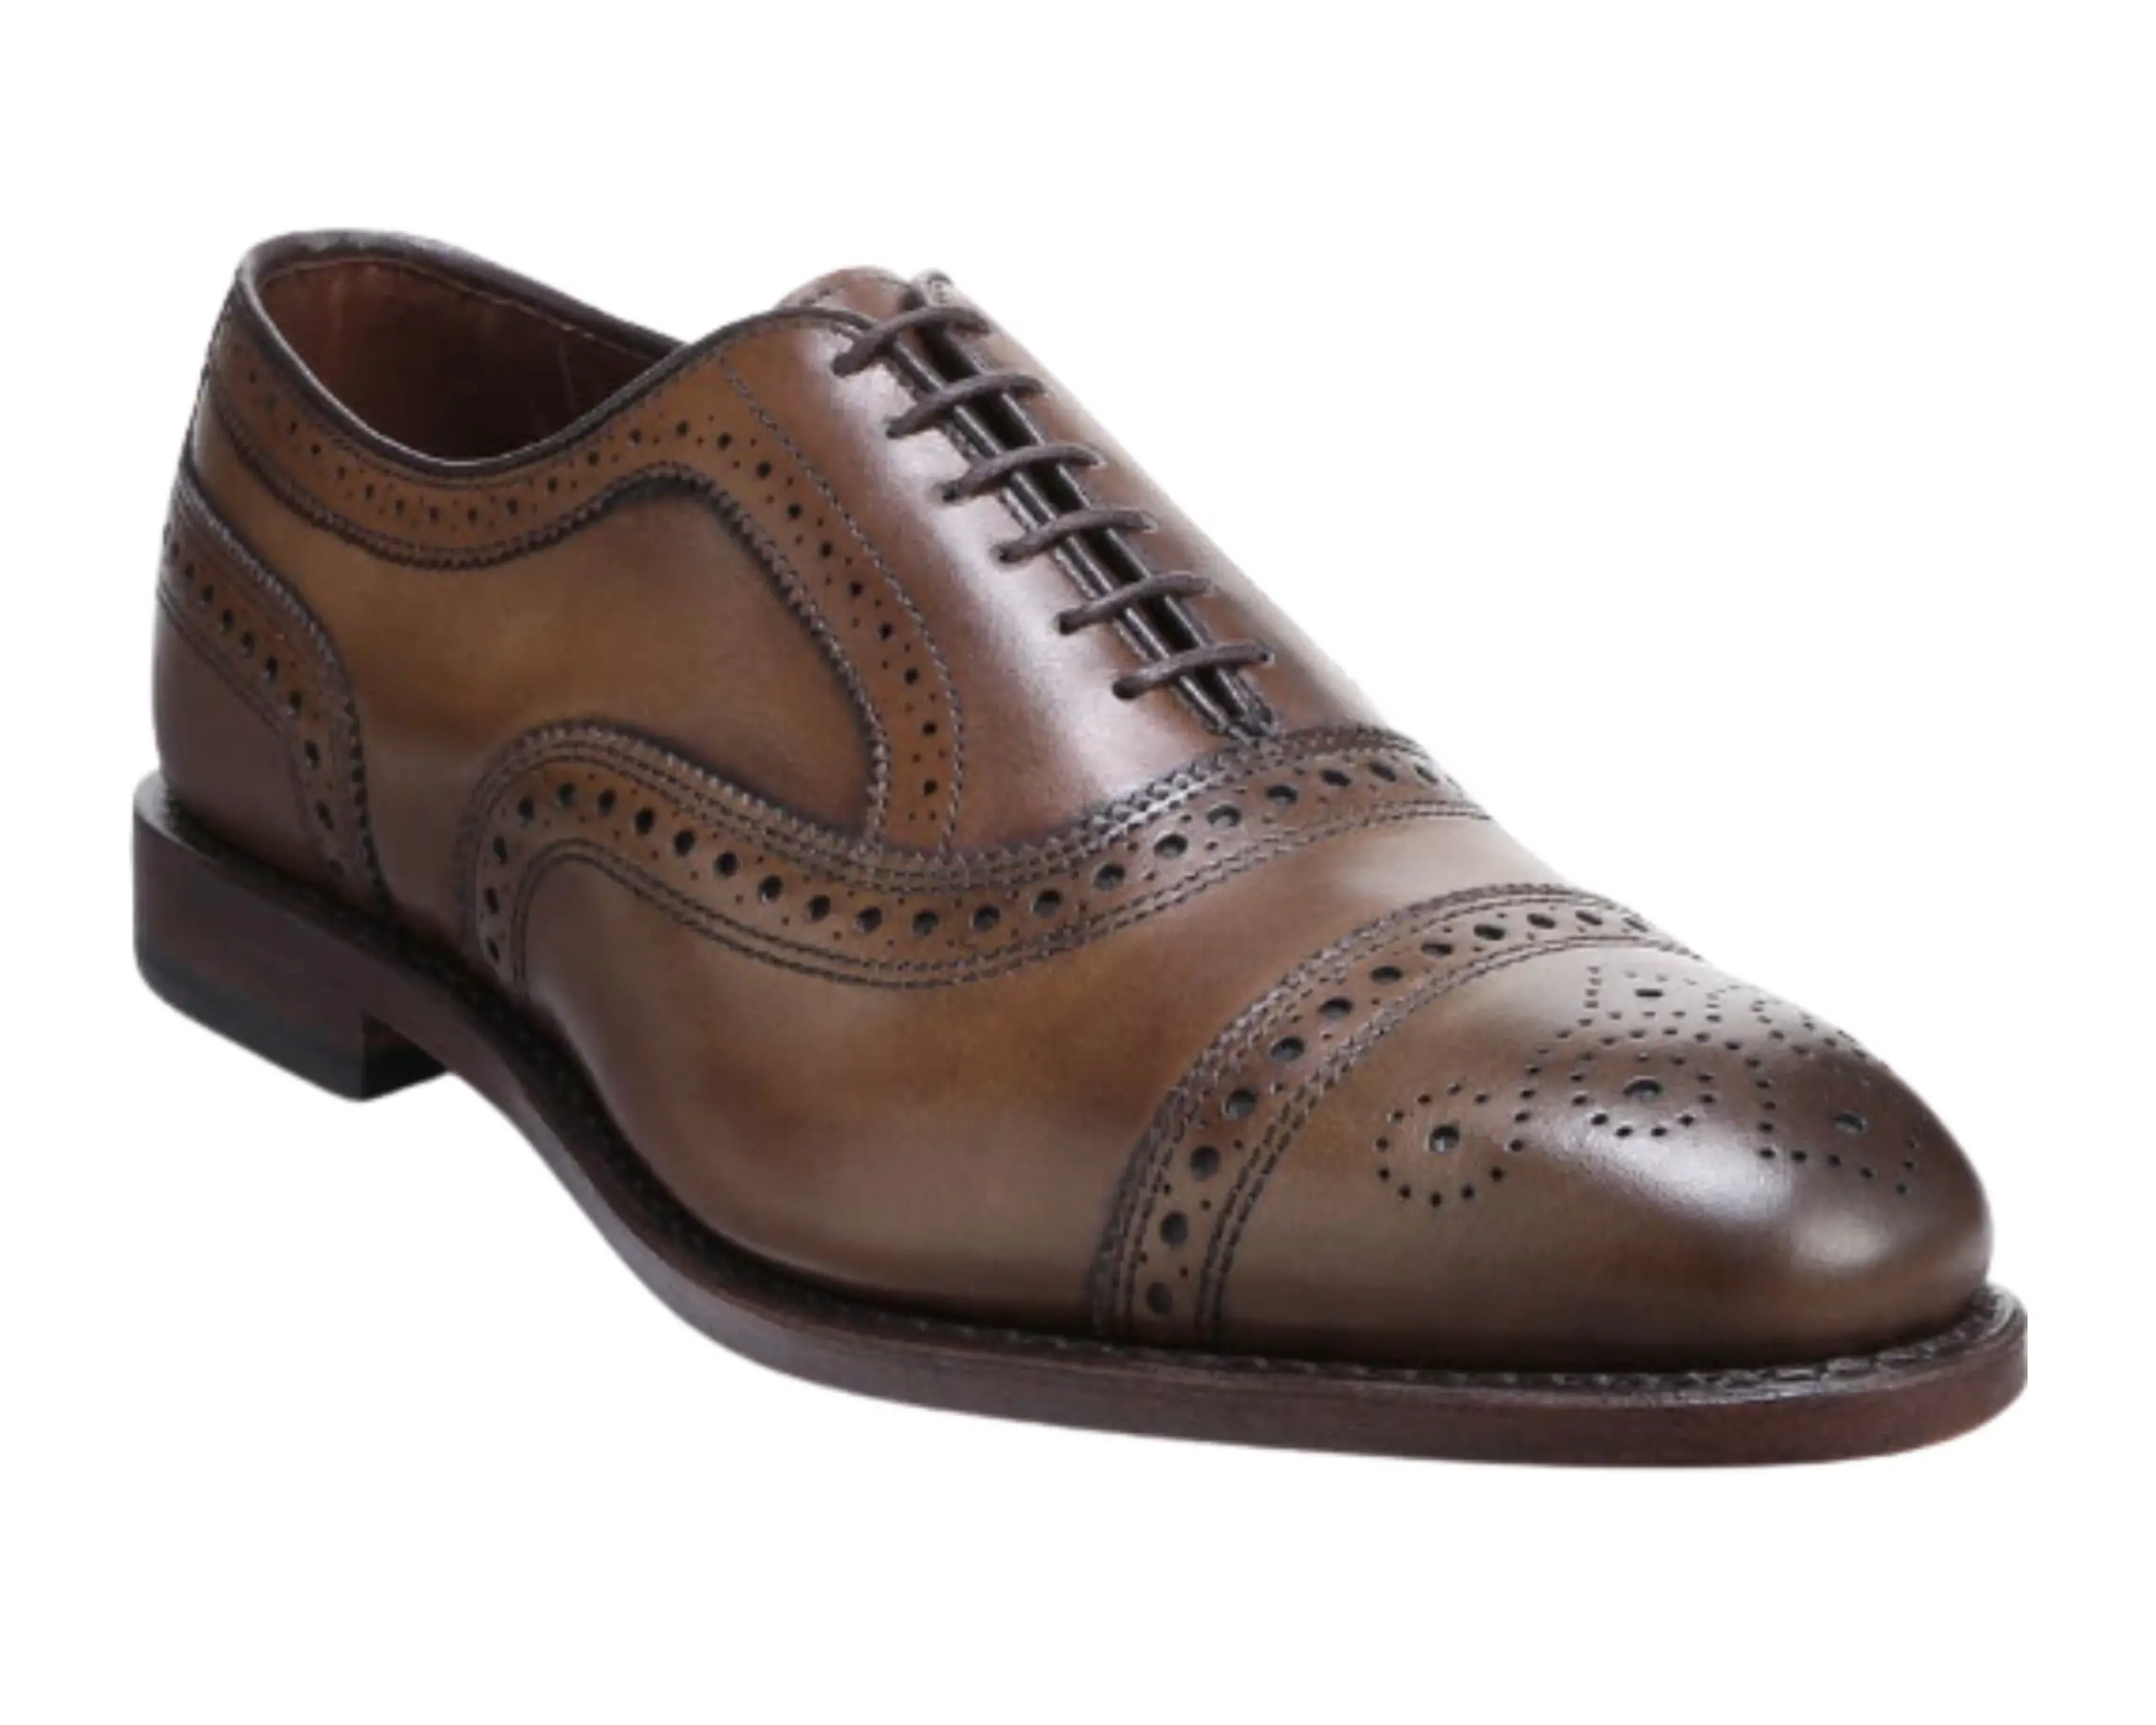 Best brown dress shoes for men